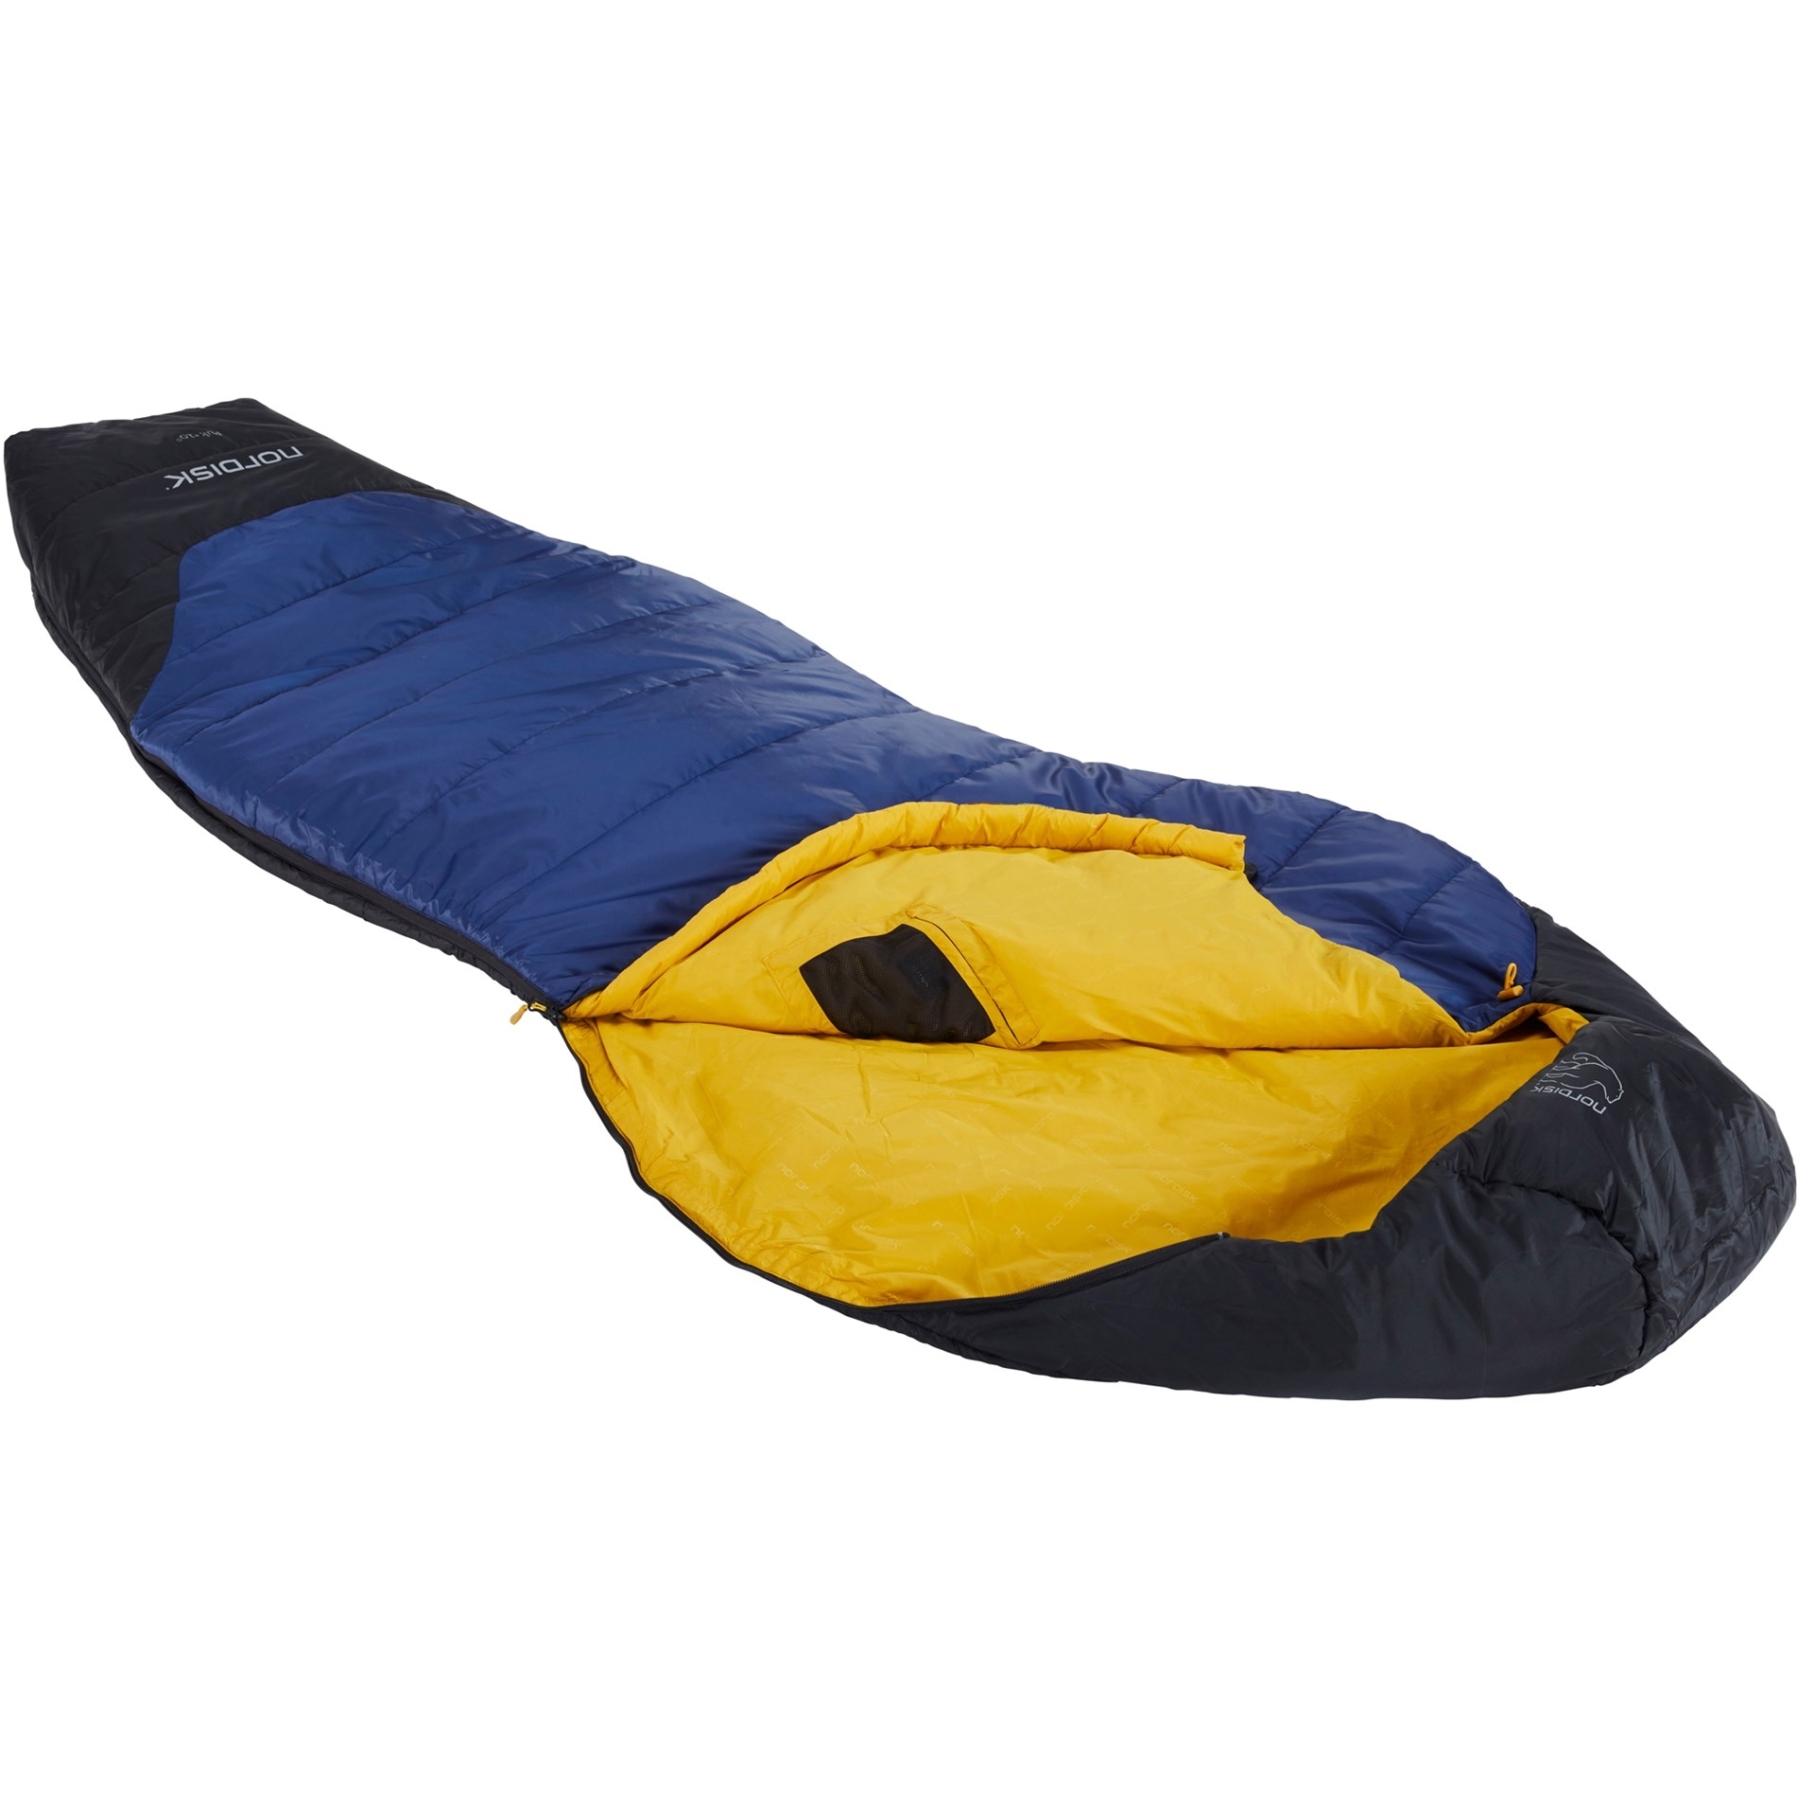 Nordisk Puk +10 Curve XL Sleeping Bag - true navy/mustard yellow 